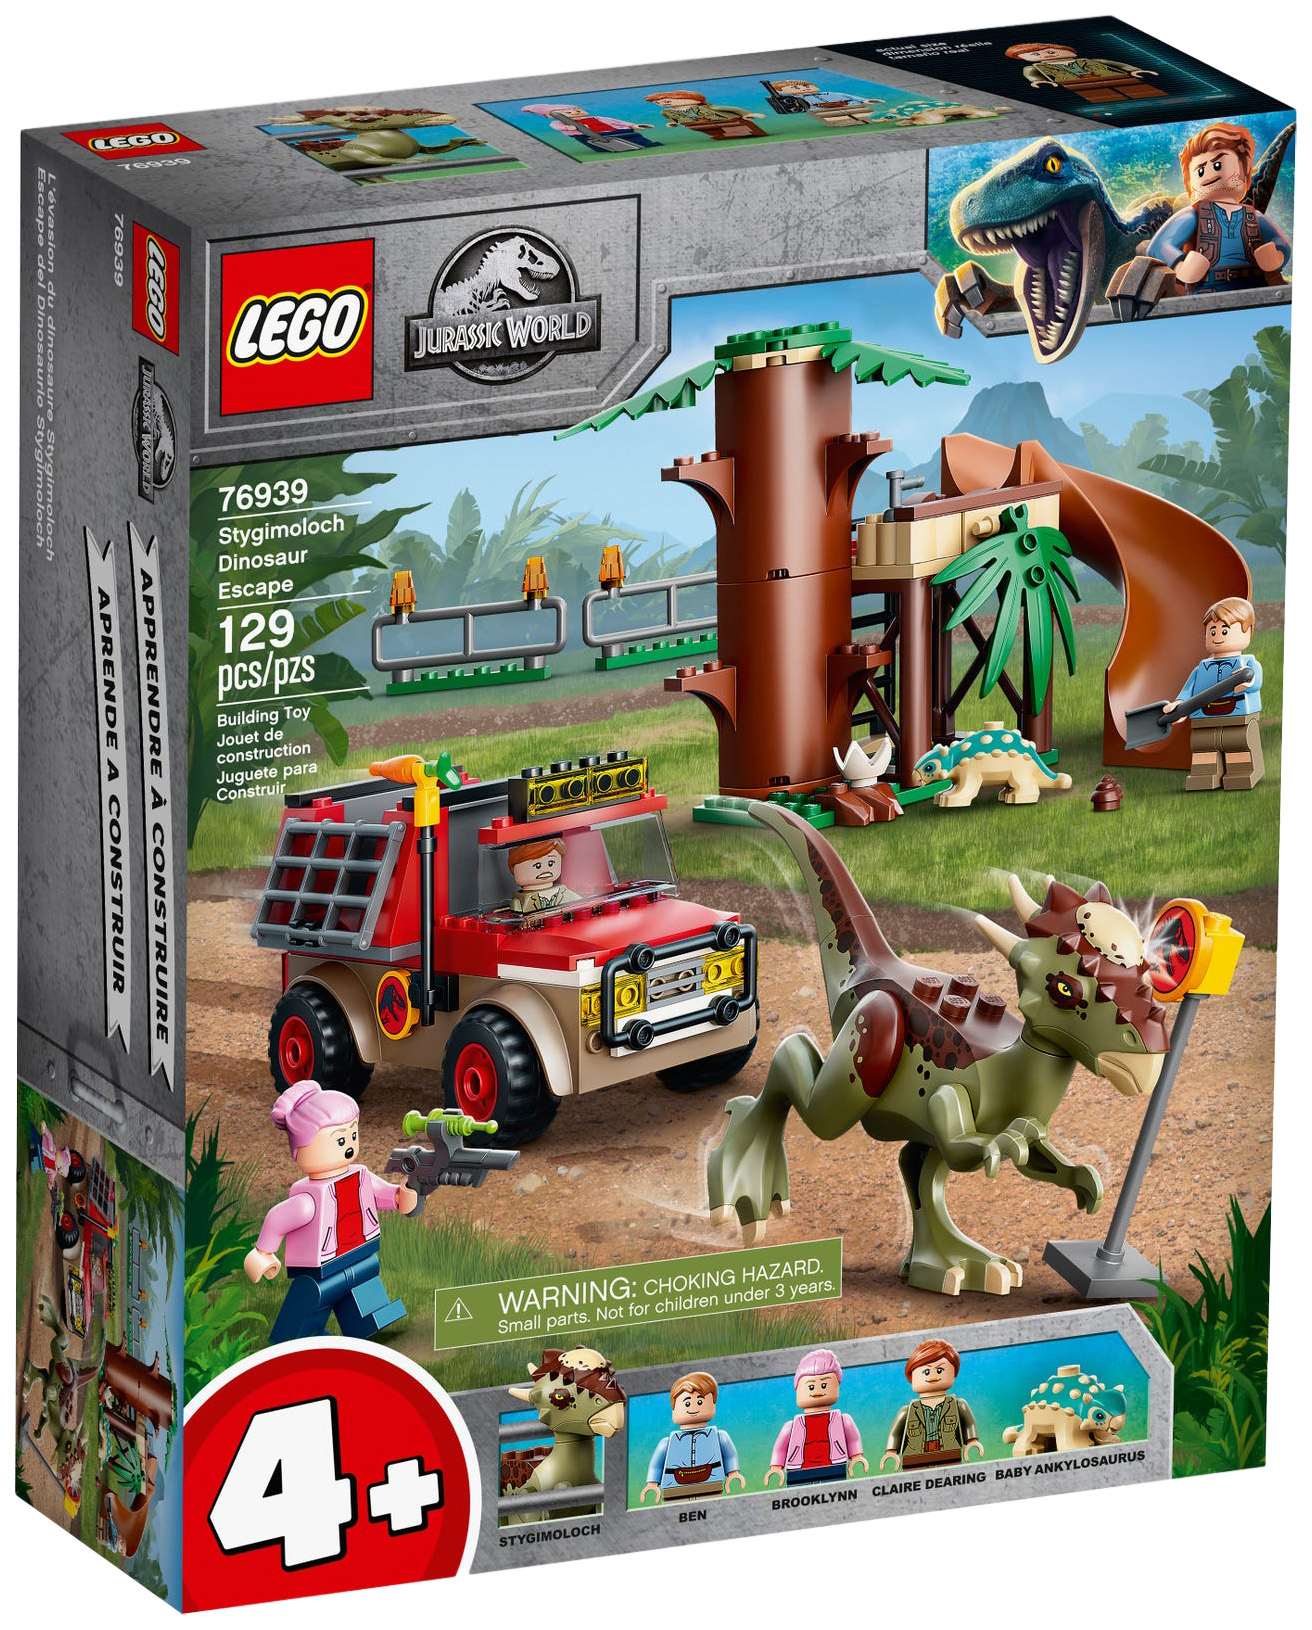 Конструктор LEGO Jurassic World 76939 Побег стигимолоха конструктор lego побег ти рекса 1212 деталей 100150893